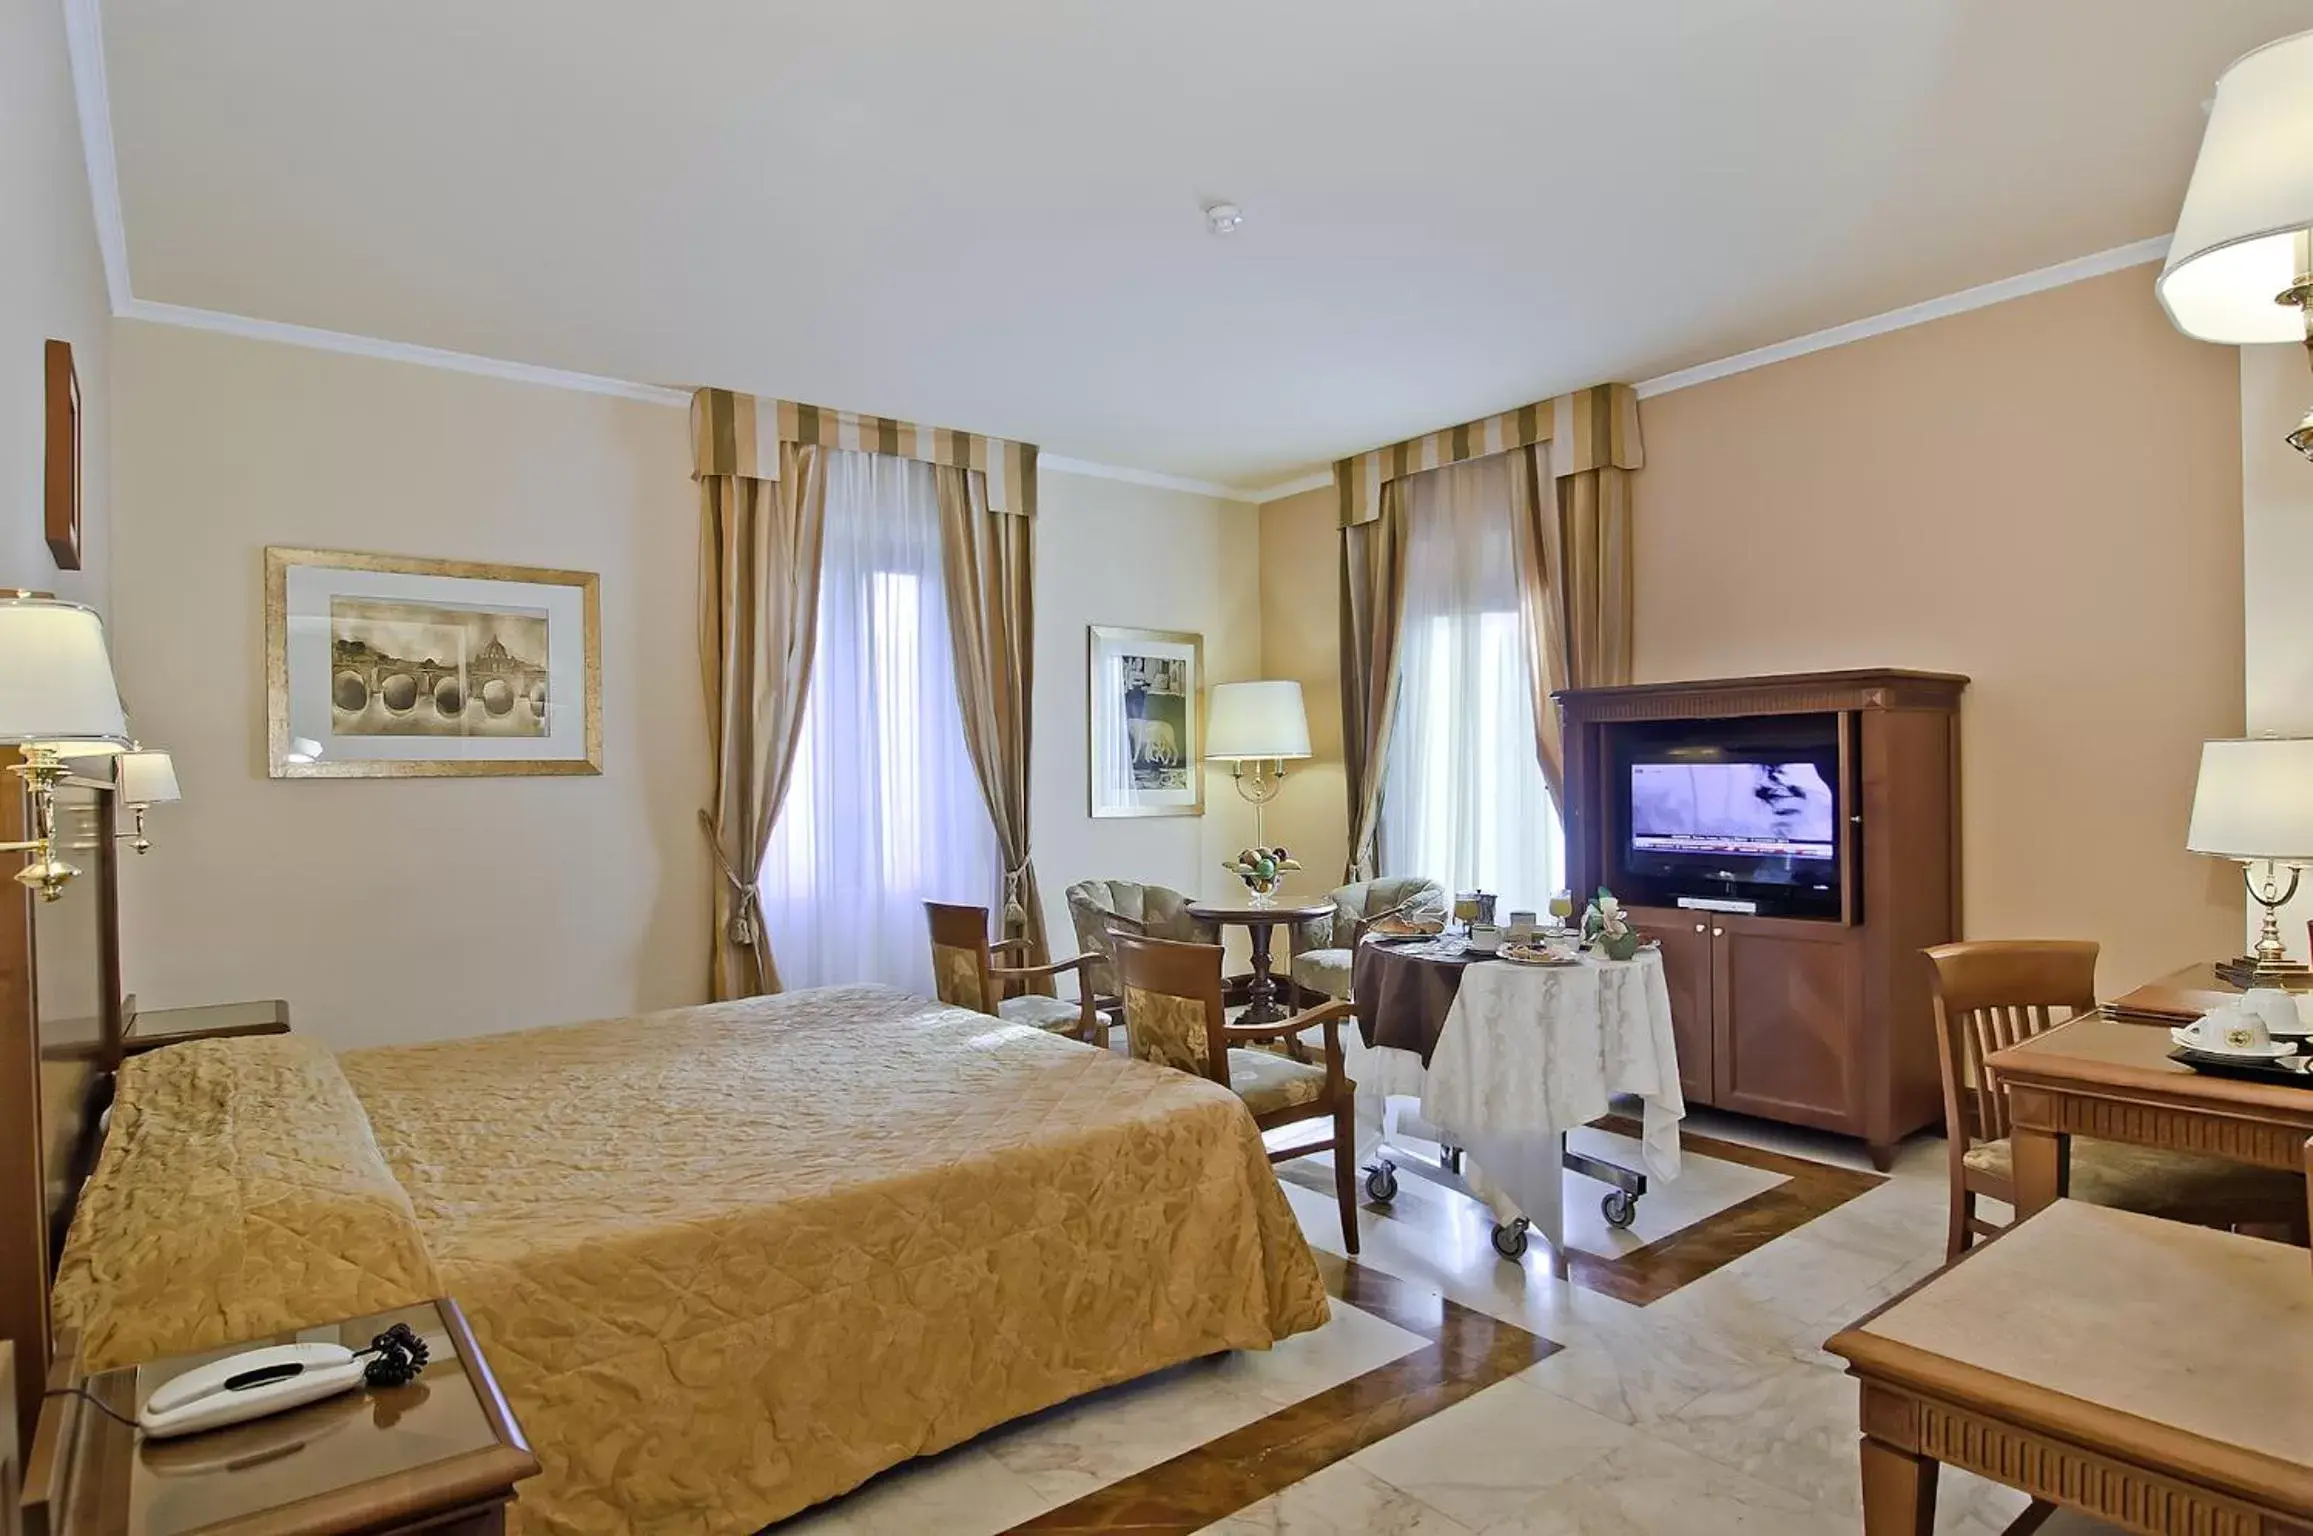 Photo of the whole room in Tmark Hotel Vaticano